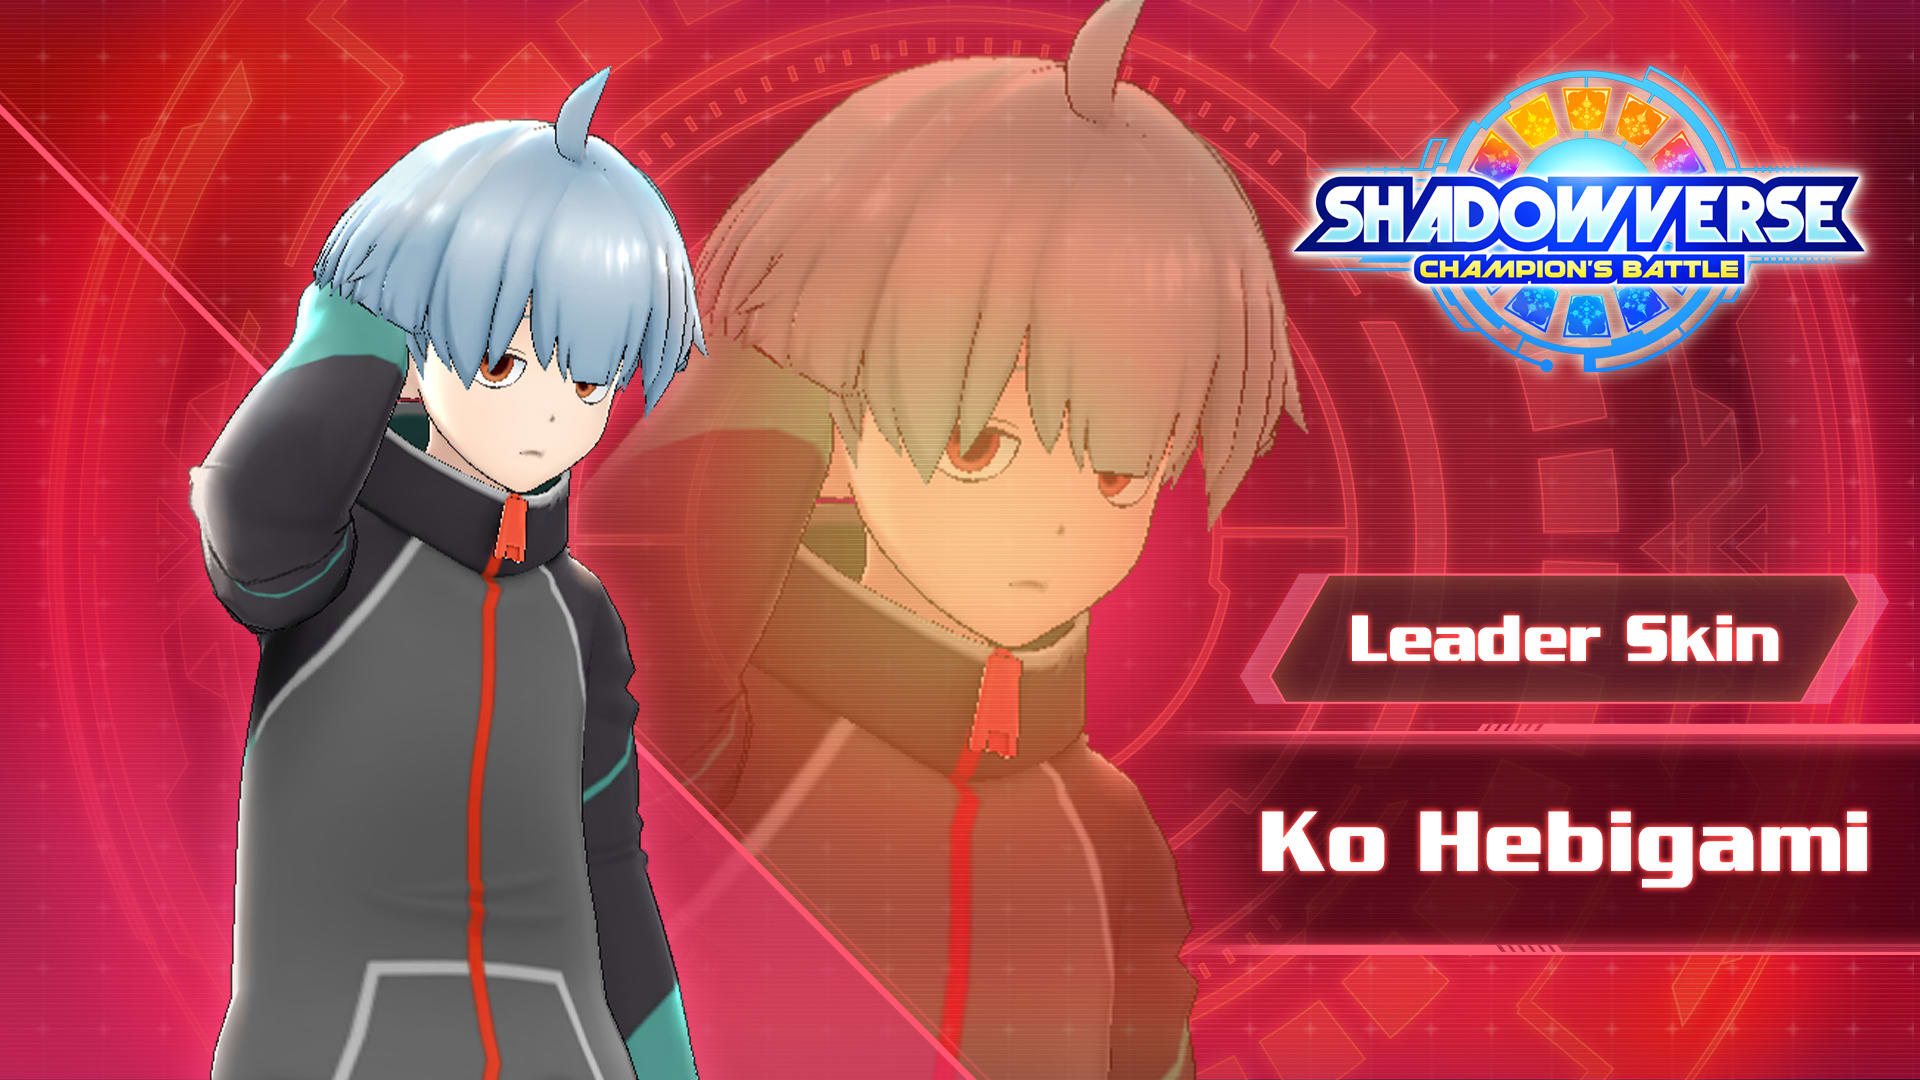 Leader Skin: "Ko Hebigami"